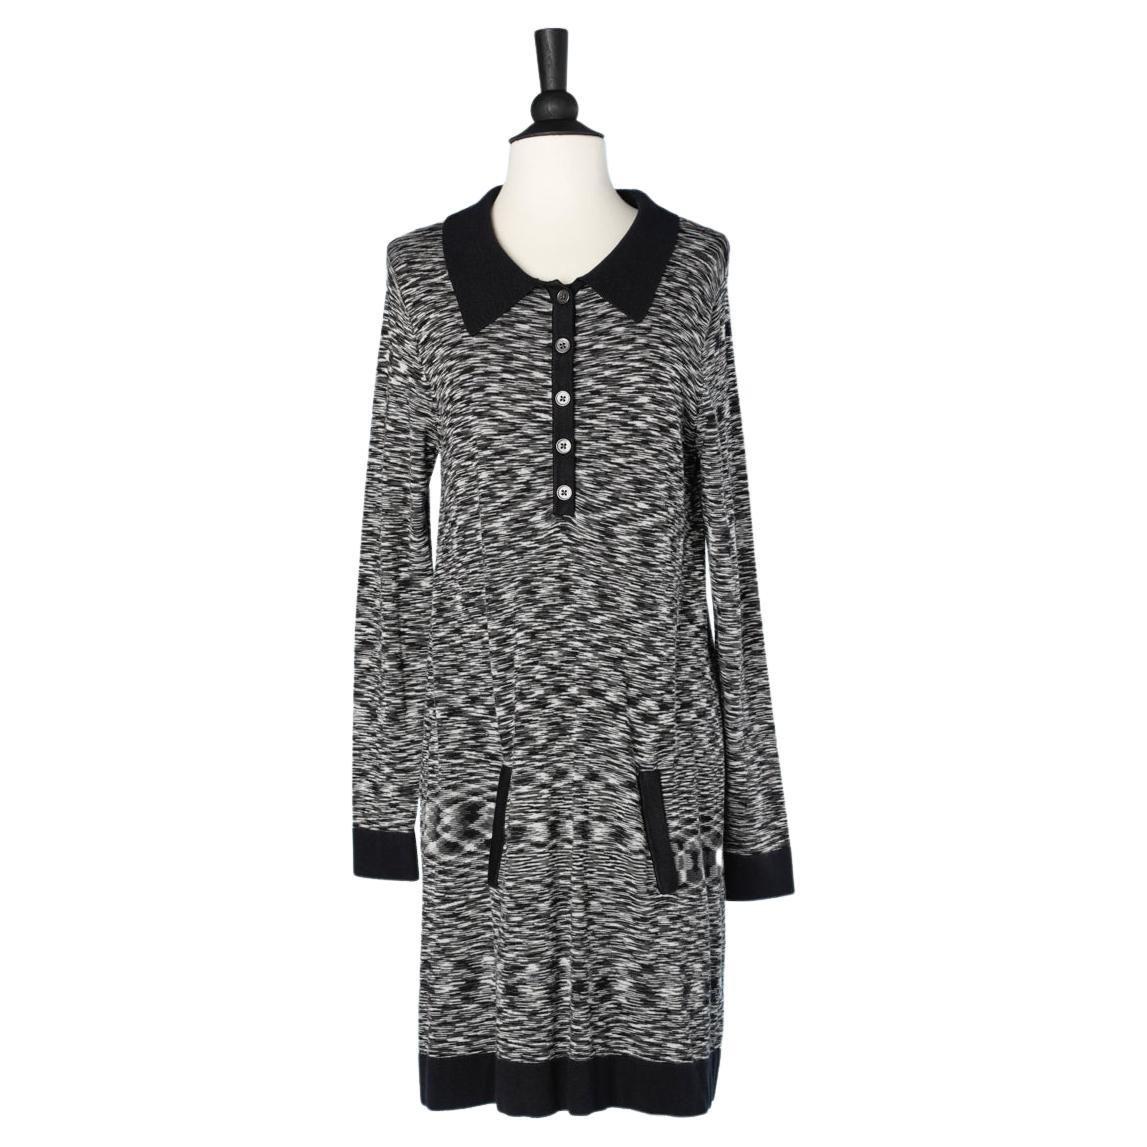 Black and white polo knit dress Missoni 